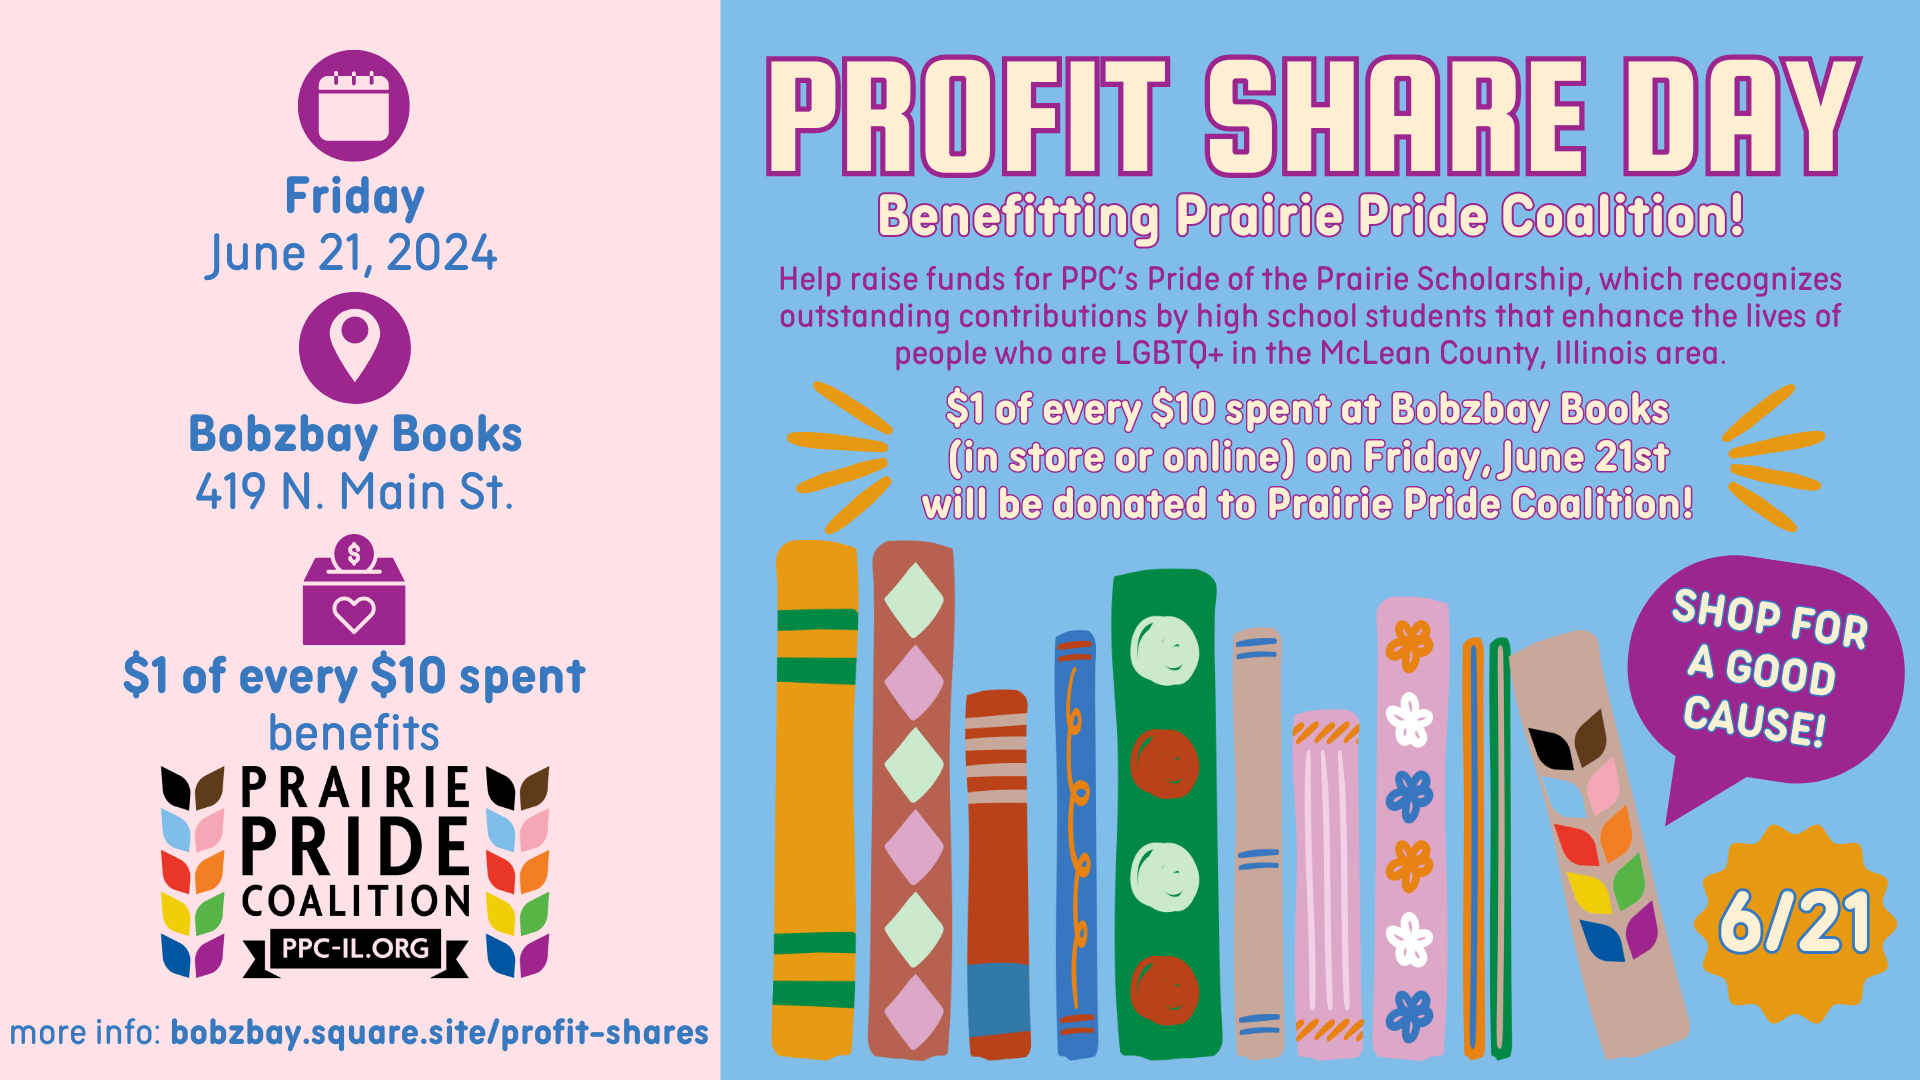 Profit Share Day Benefitting Prairie Pride Coalition at Bobzbay Books